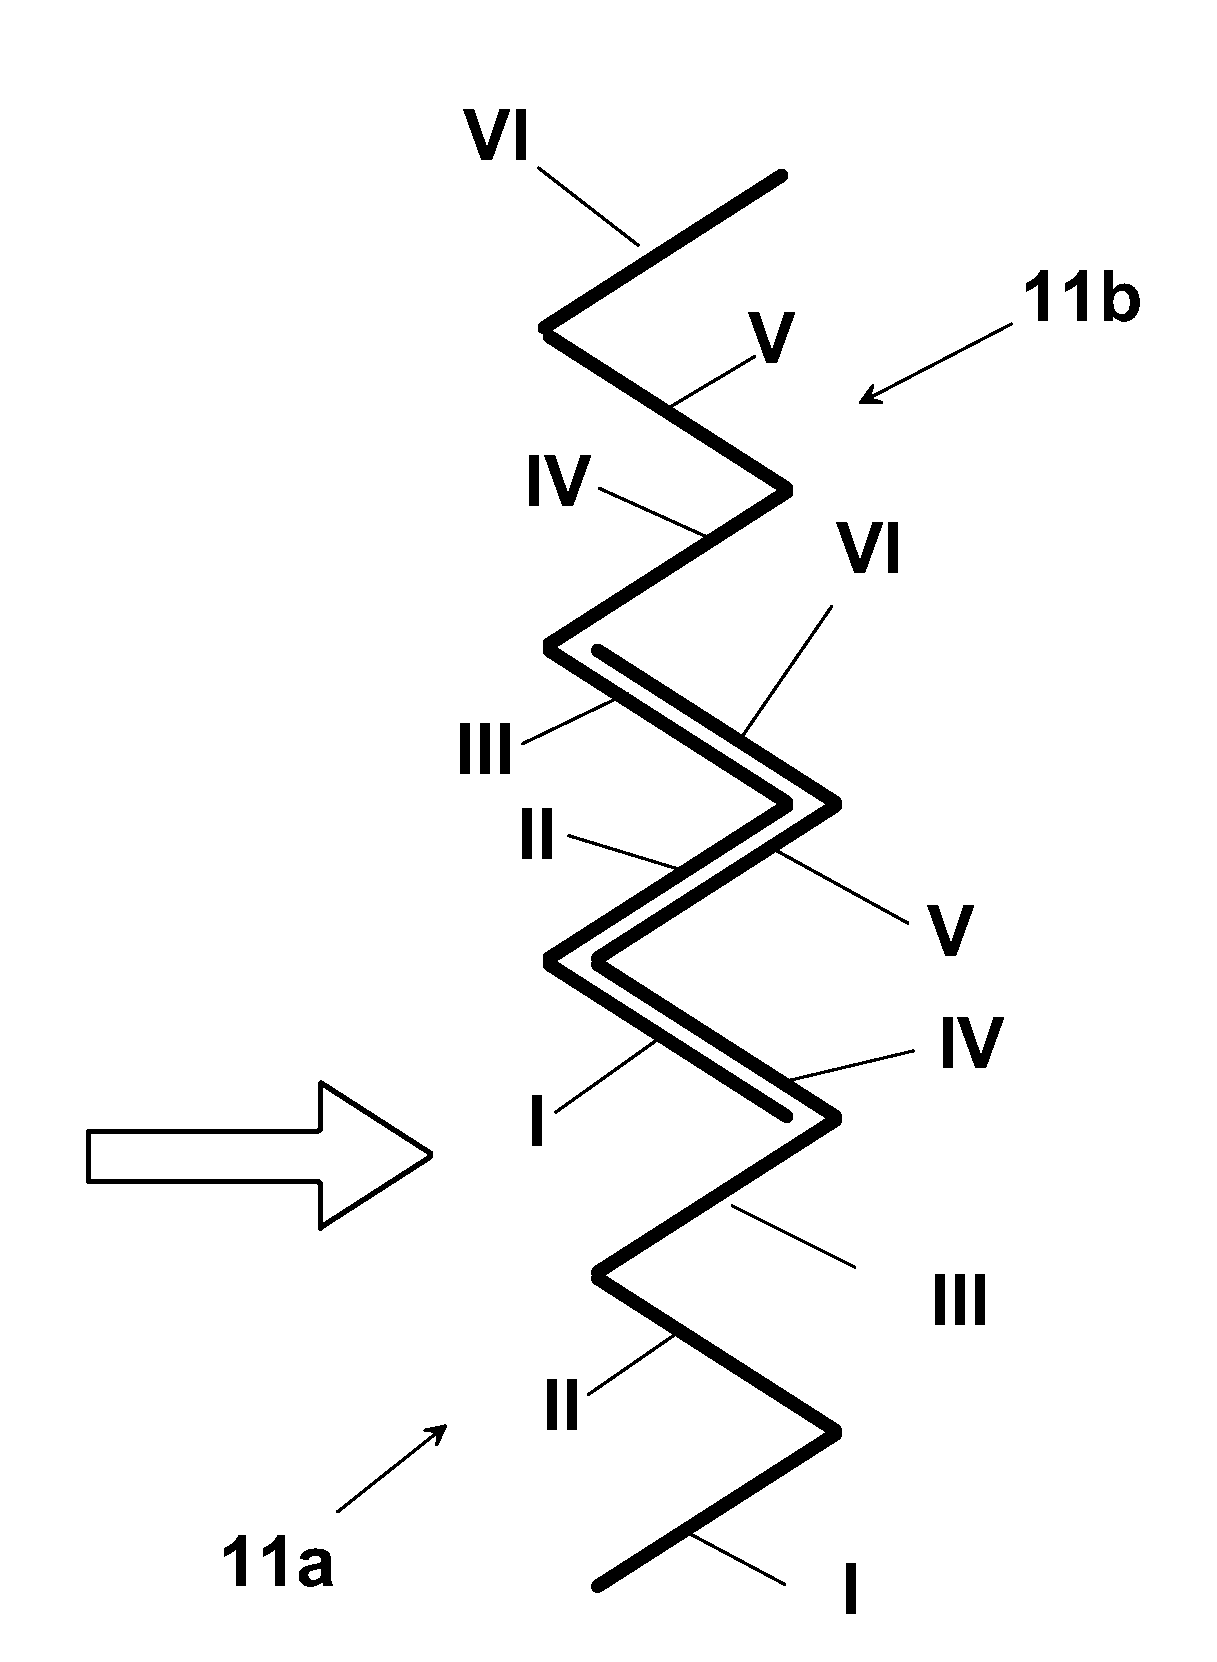 Multi-fold interfolding machine structure